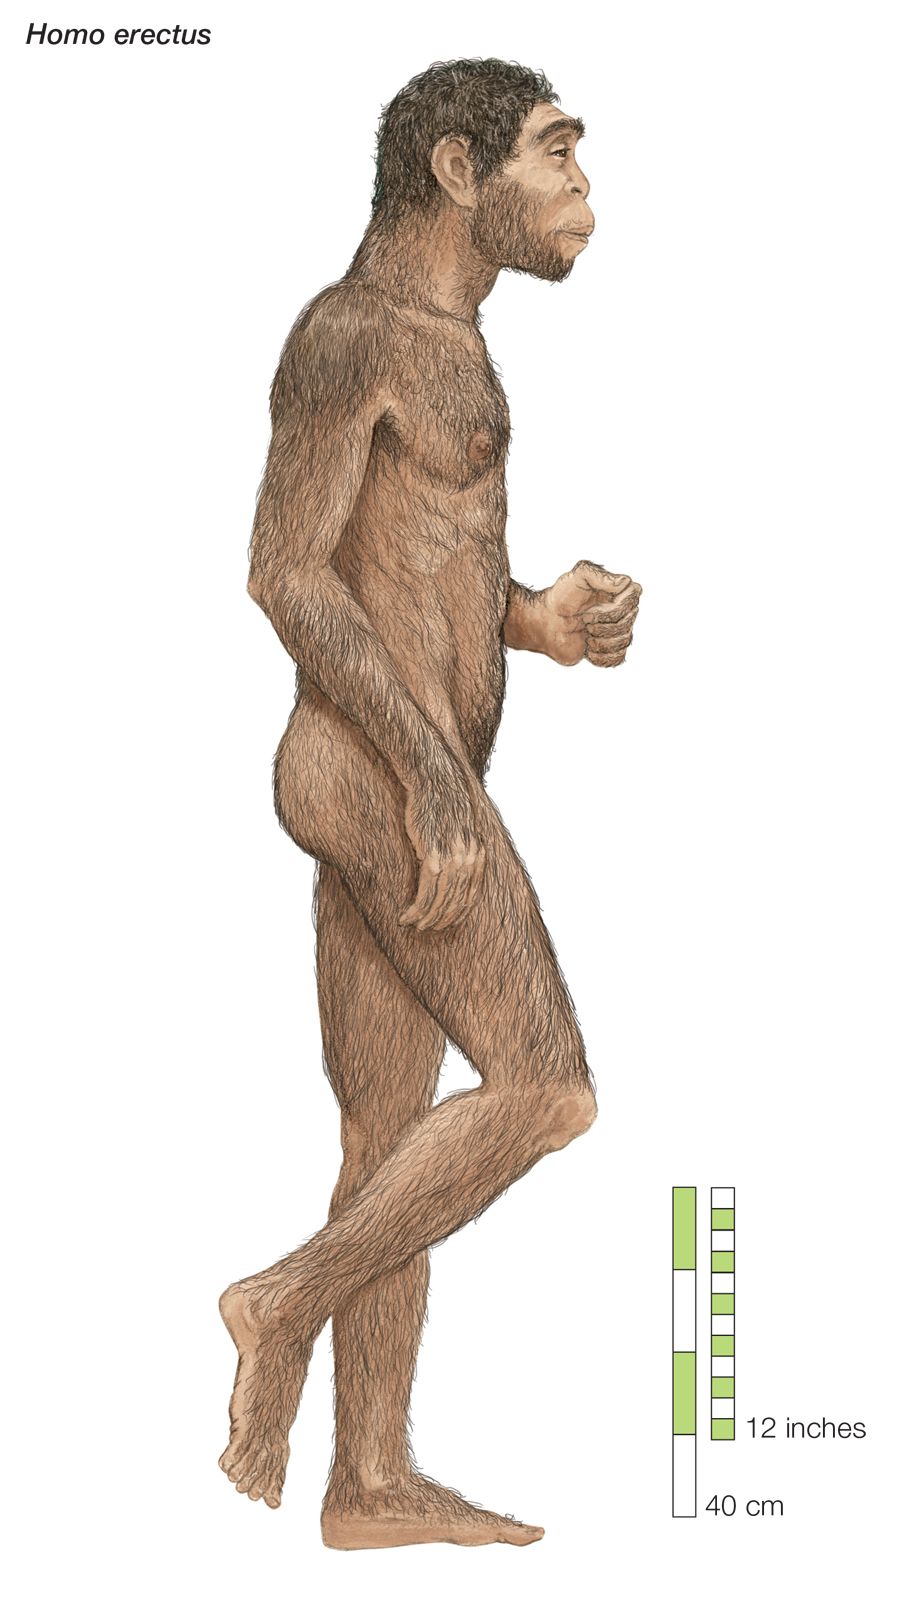 Homo-erectus-rendering-Artist.jpg